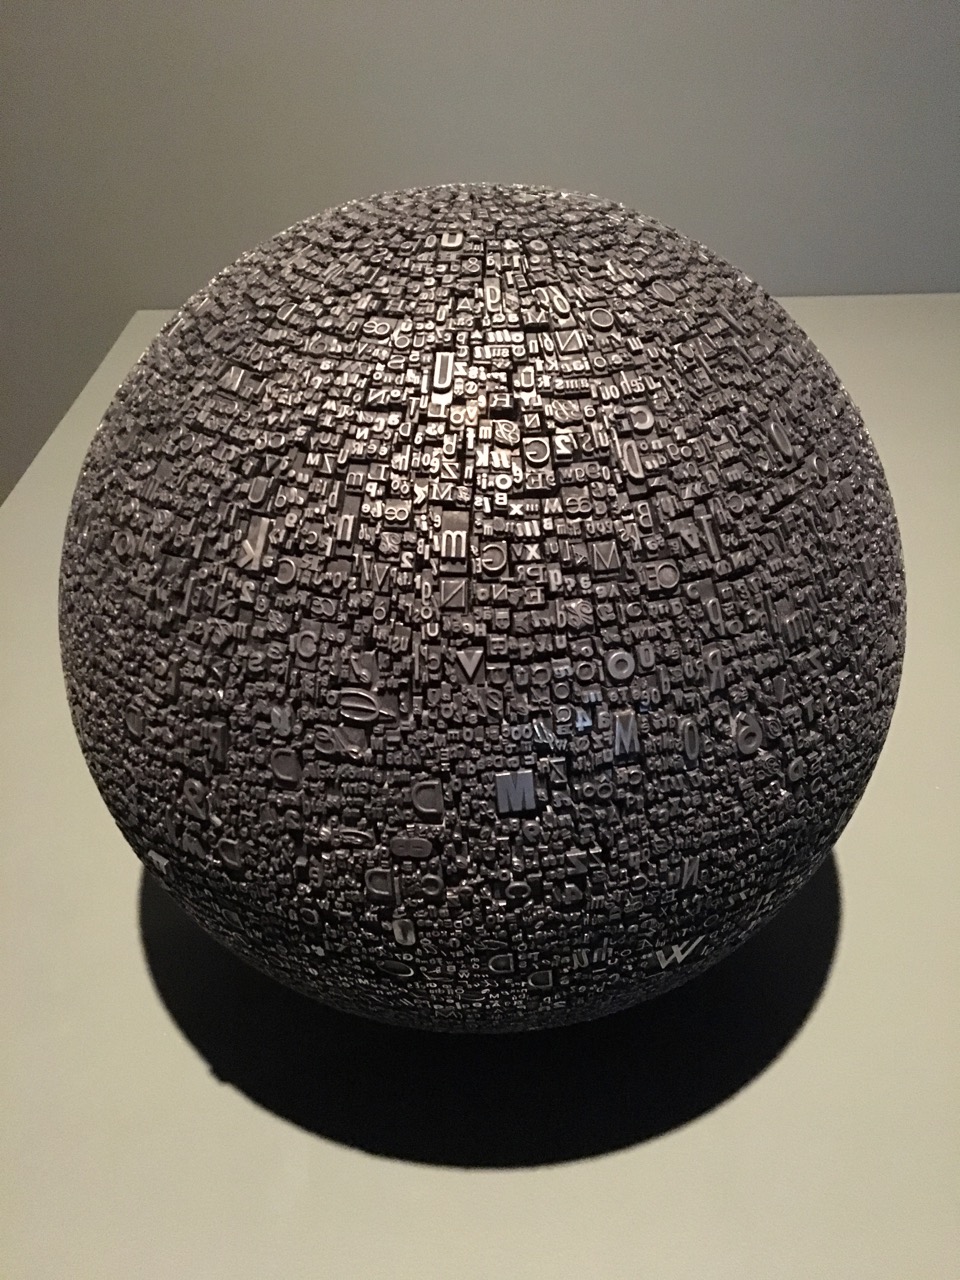 Language Infinity Sphere by Rosa Barba, at Remai Modern Art Gallery, Saskatoon